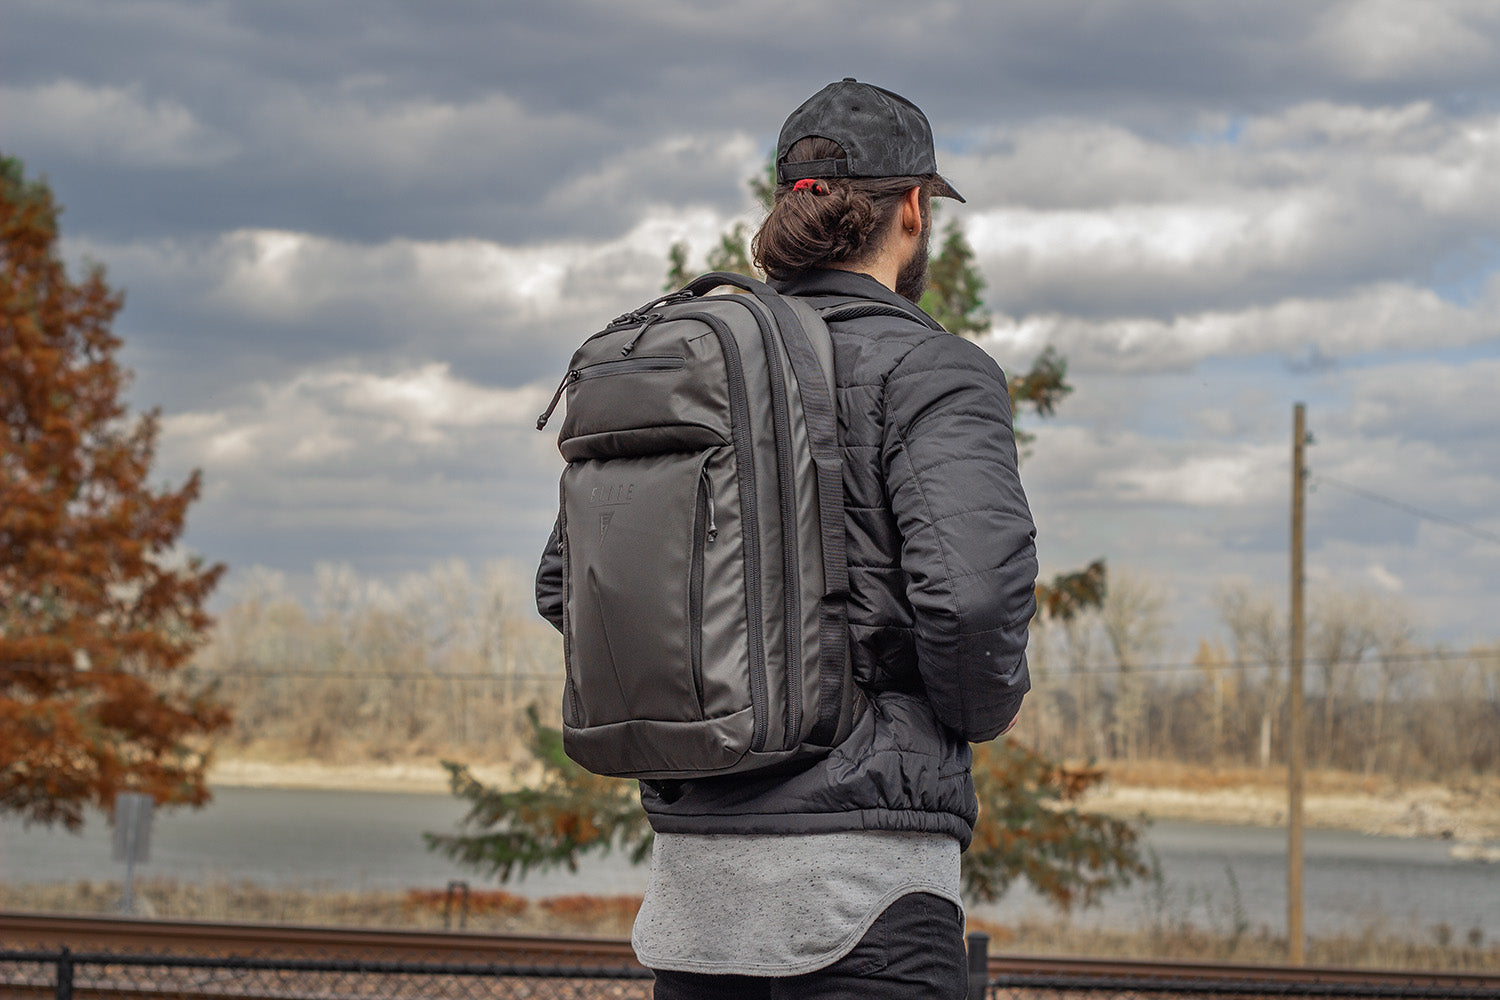 Buy Wholesale China Tactical Shoulder Go Bag Carry Pack Travel